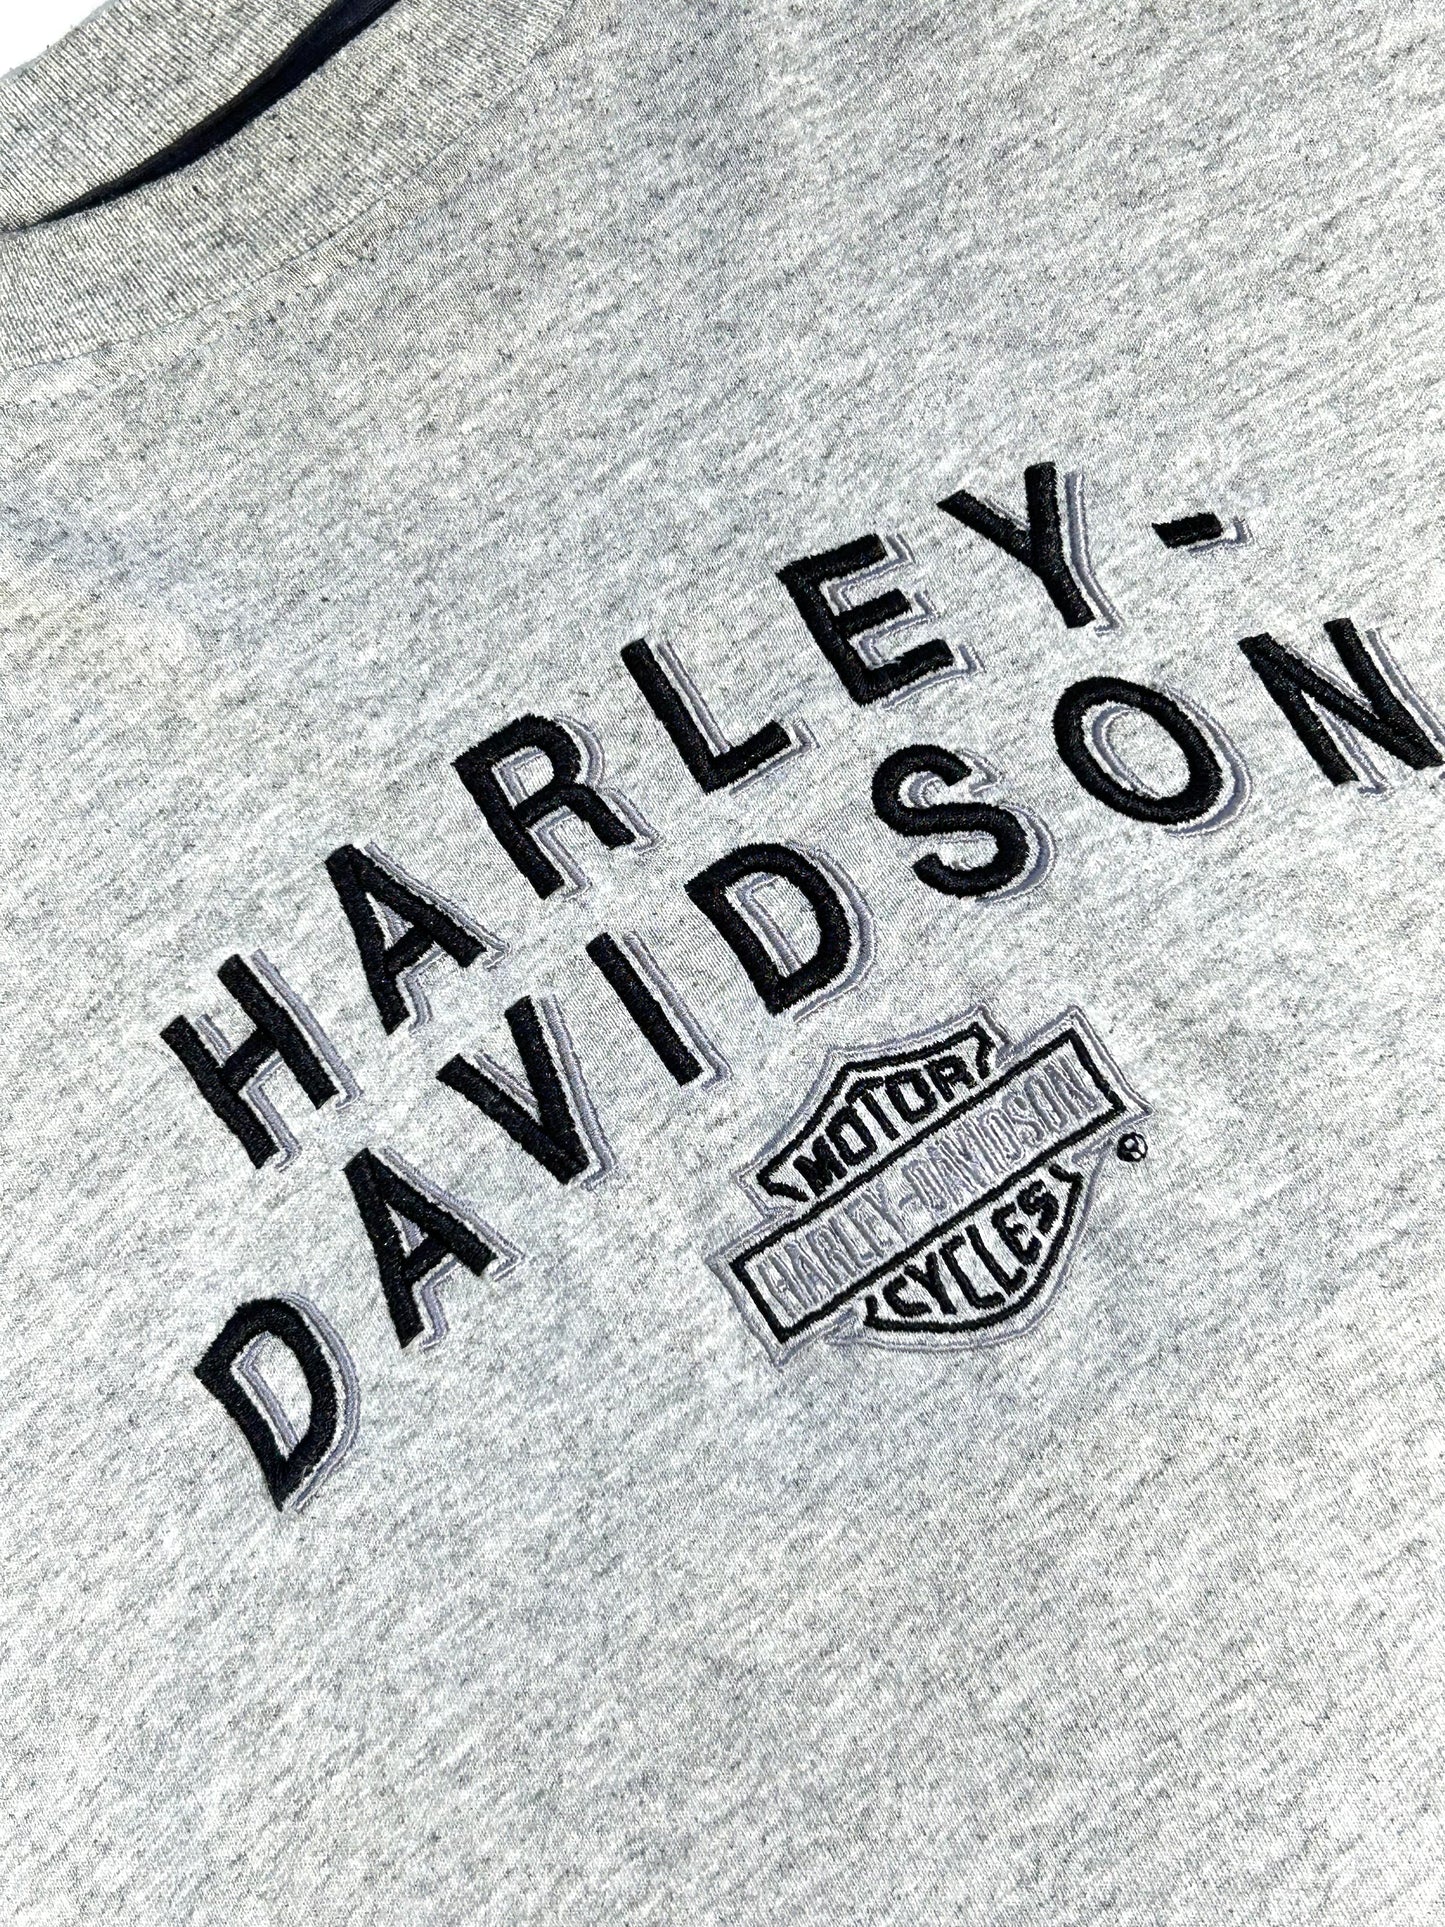 Vintage Harley Davidson Shirt Long Sleeve